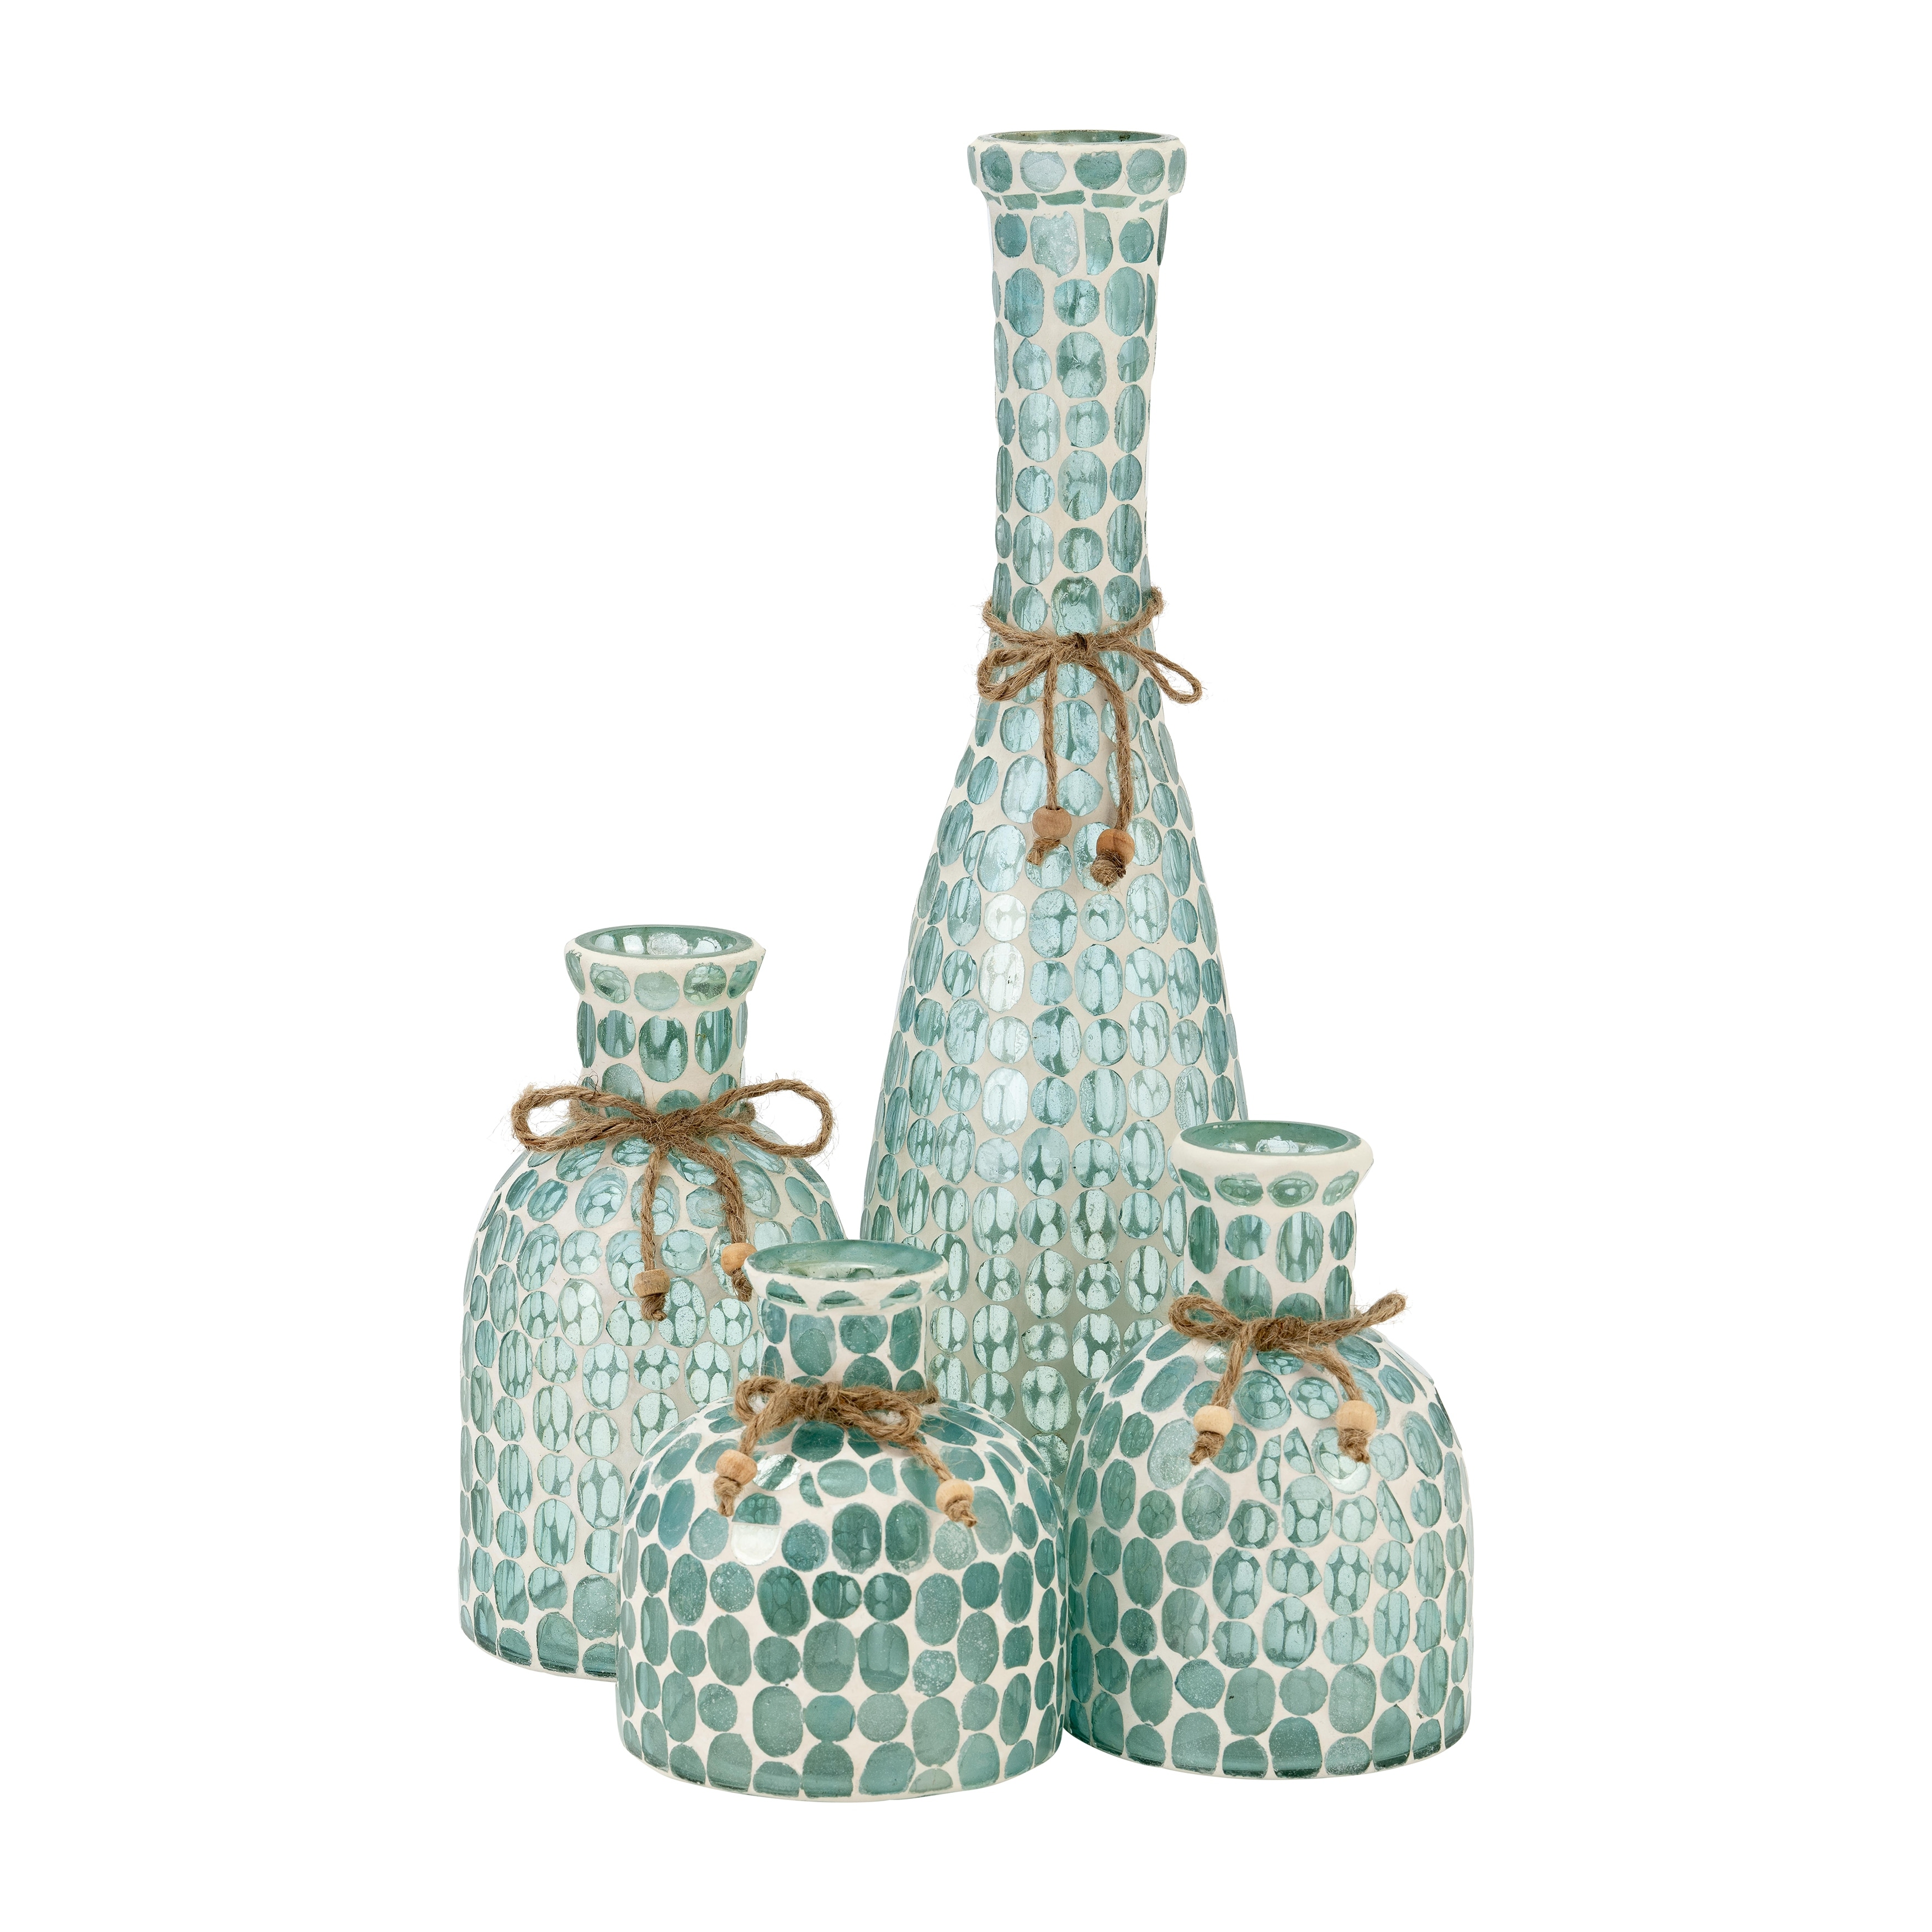 8" Glass Mosaic Vase Contemporary Coastal Blue Decorative Flower Vase Glass Vase Table Centerpiece Decor for Home or